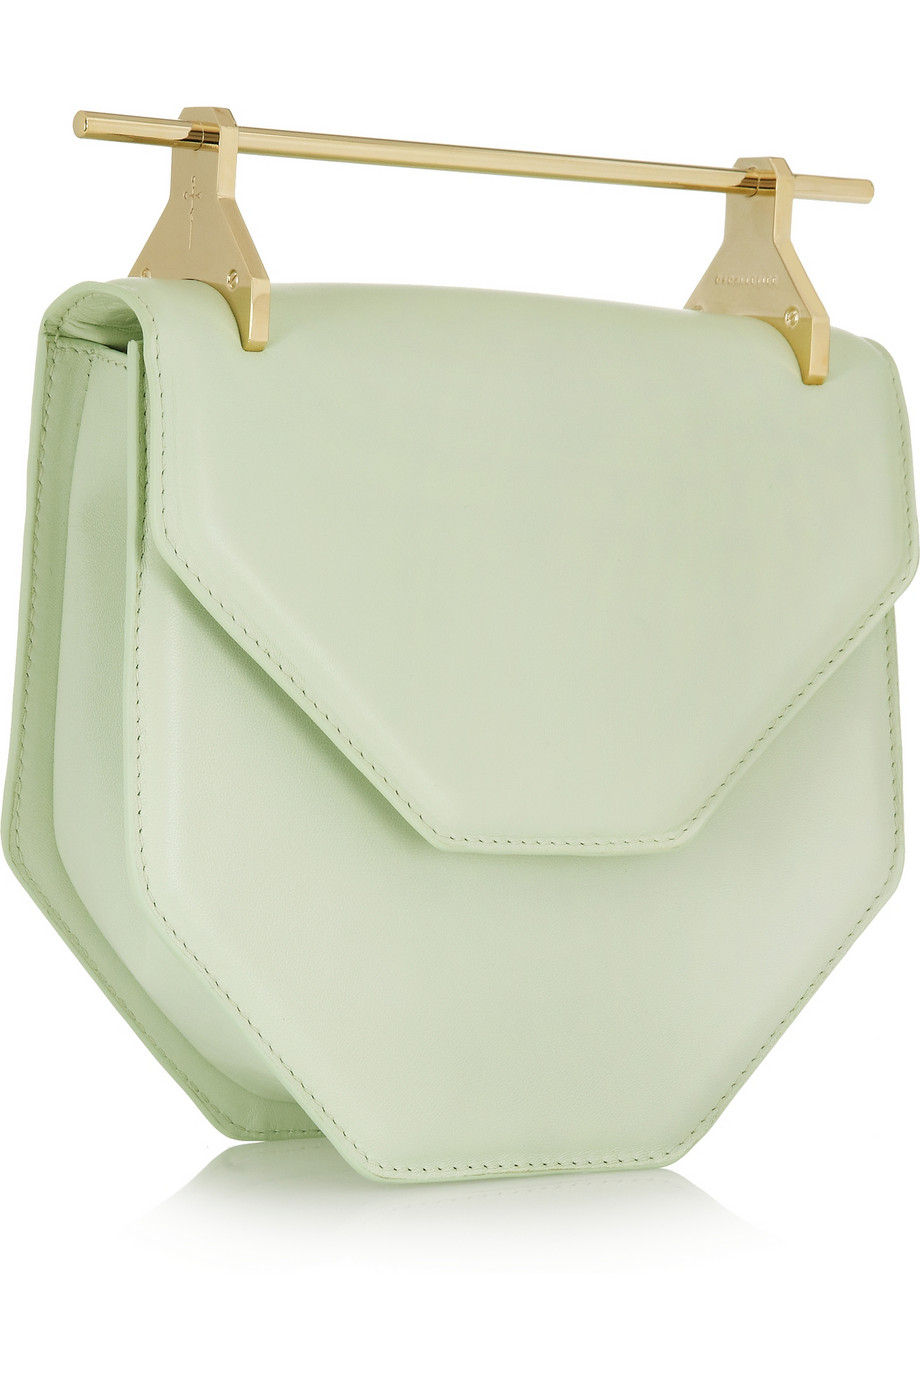 M2malletier Amor Fati Leather Shoulder Bag in Green | Lyst